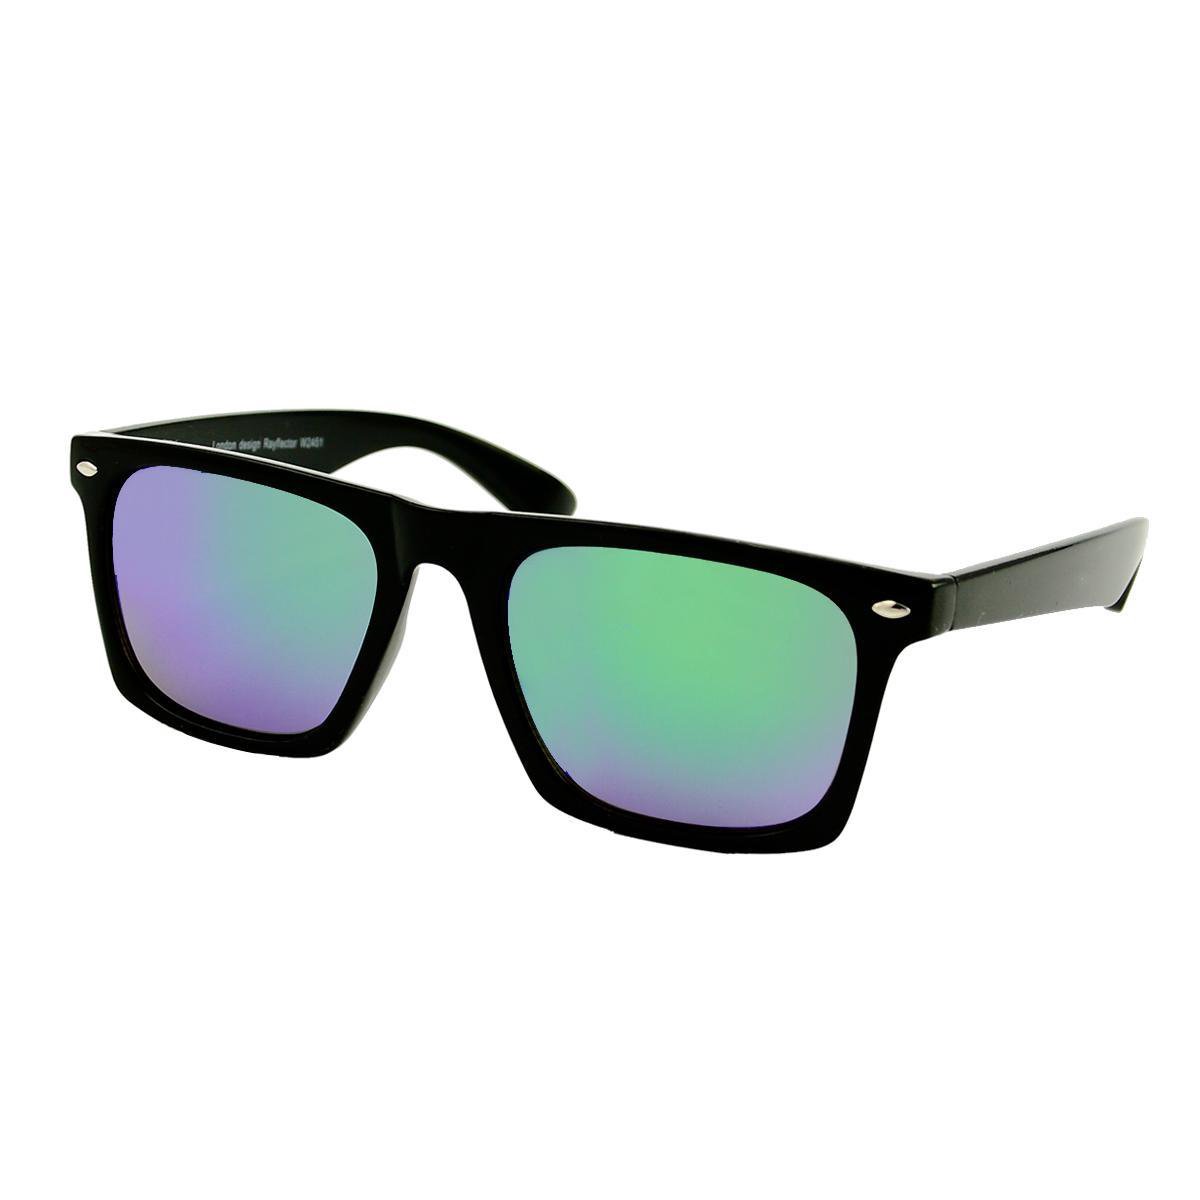 Heren Zonnebril - Dames Zonnebril - Rechthoekig - Zwart - Groen Blauw Spiegel Glas - UV 400